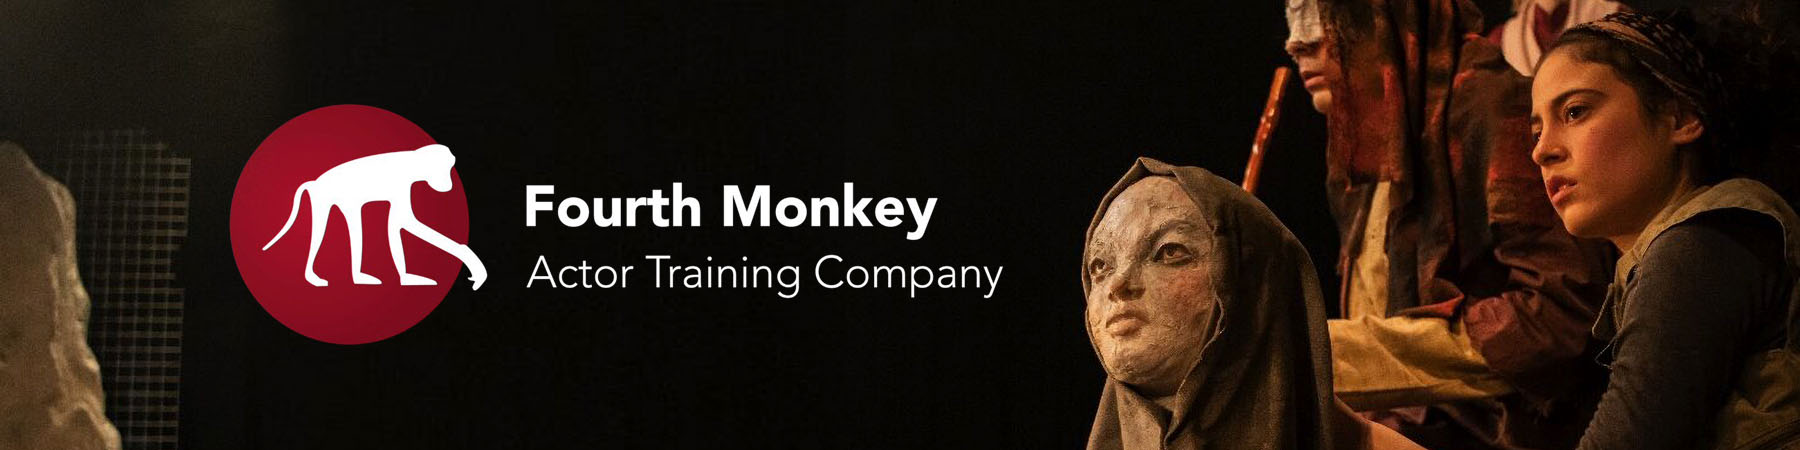 Fourth Monkey Actor Training Company